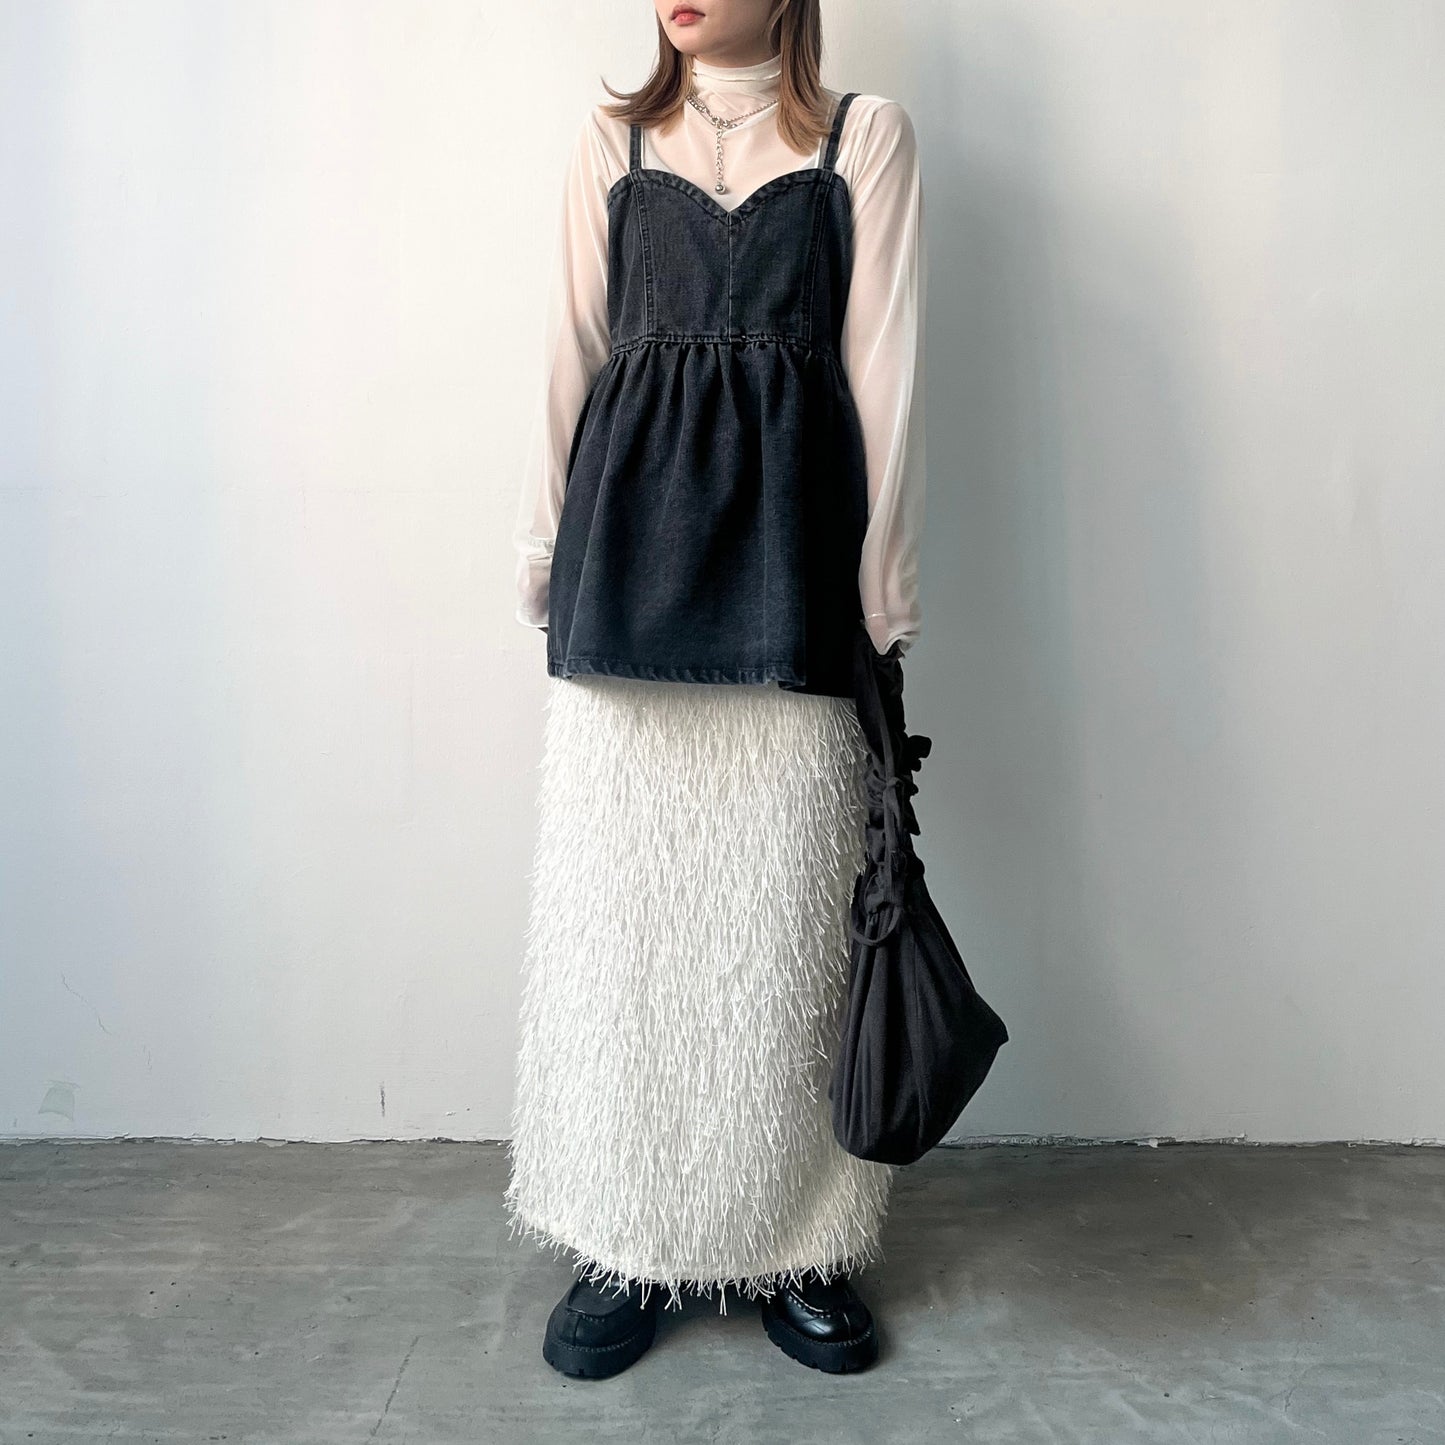 TP257- Denim Cotton Camisole | White | Black